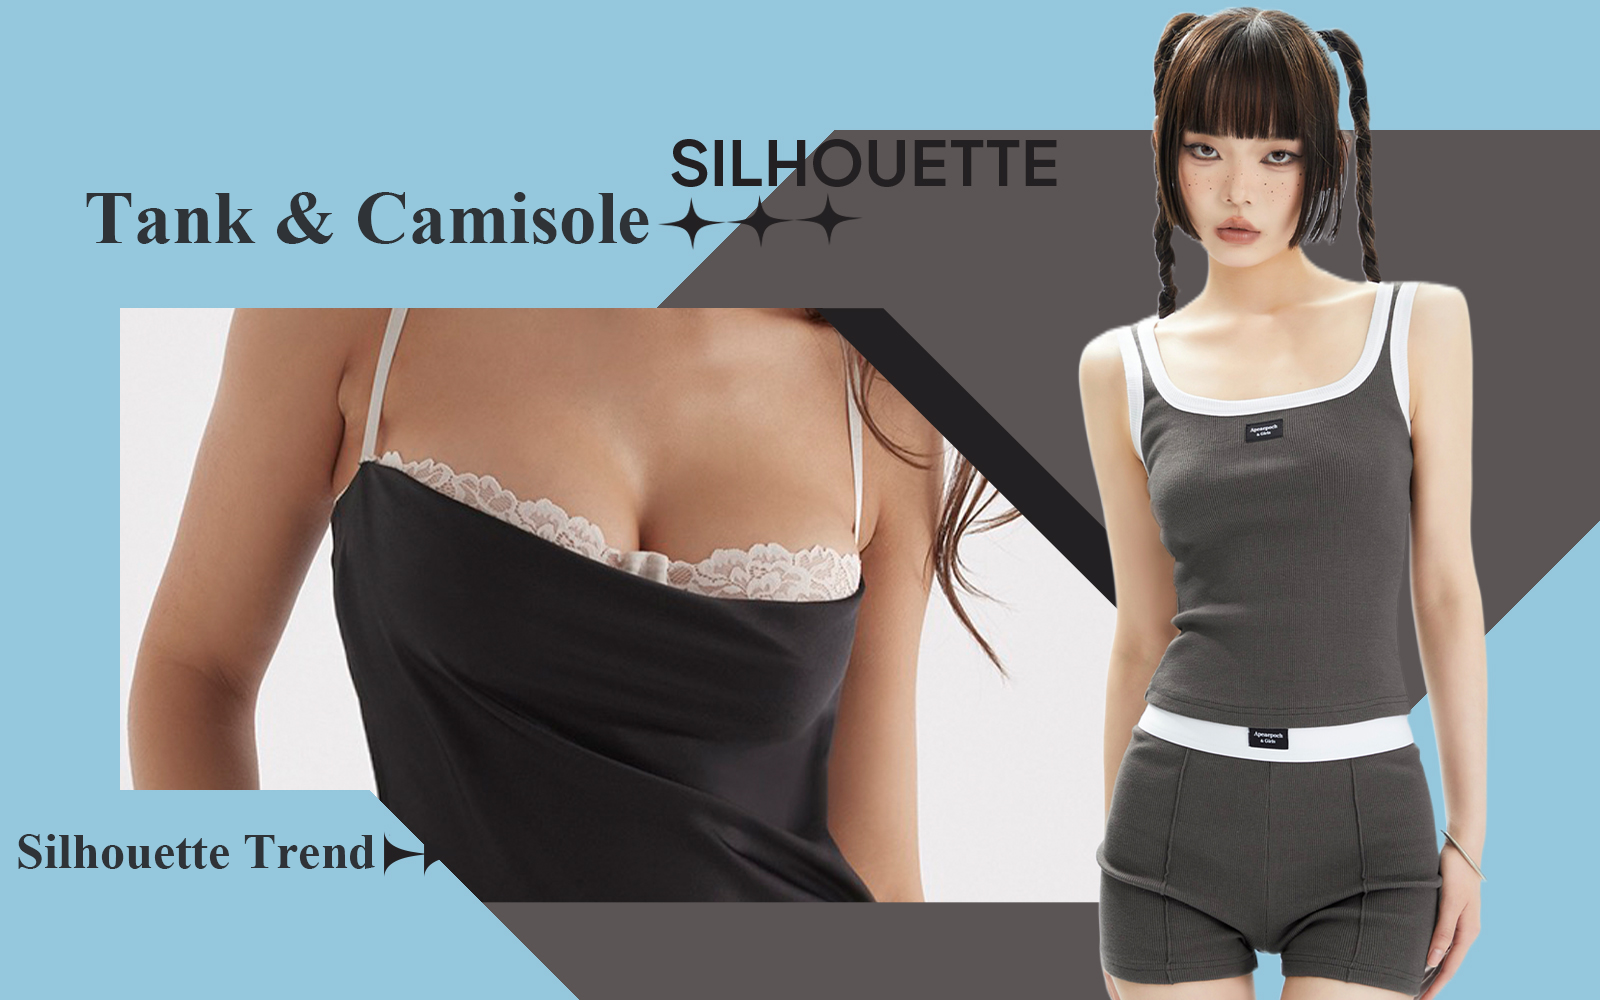 Tank & Camisole -- The Silhouette Trend for Women's Underwear